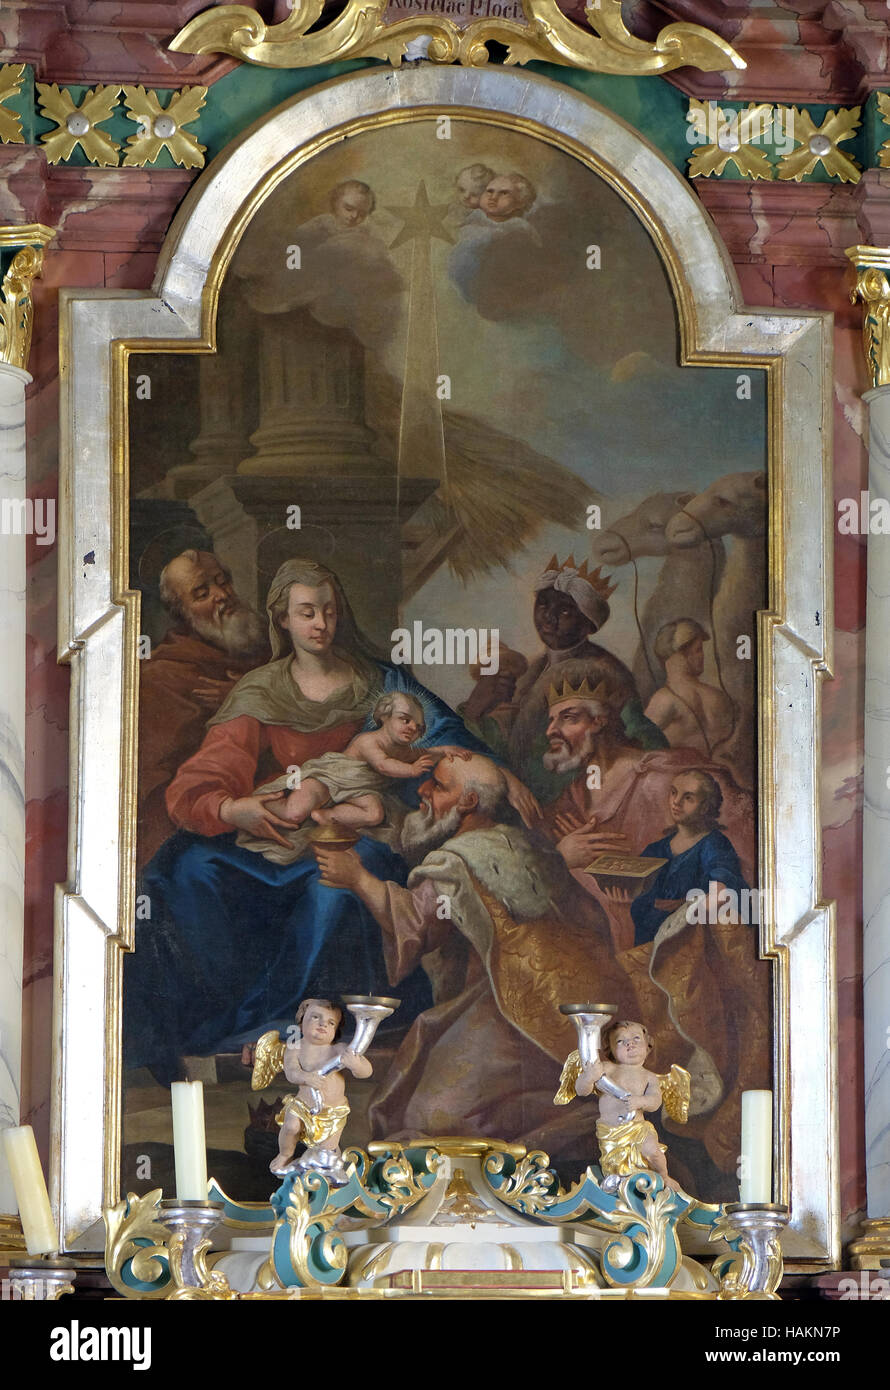 Nativity Scene, Adoration of the Magi altarpiece in parish church of the Holy Trinity in Krasic, Croatia Stock Photo